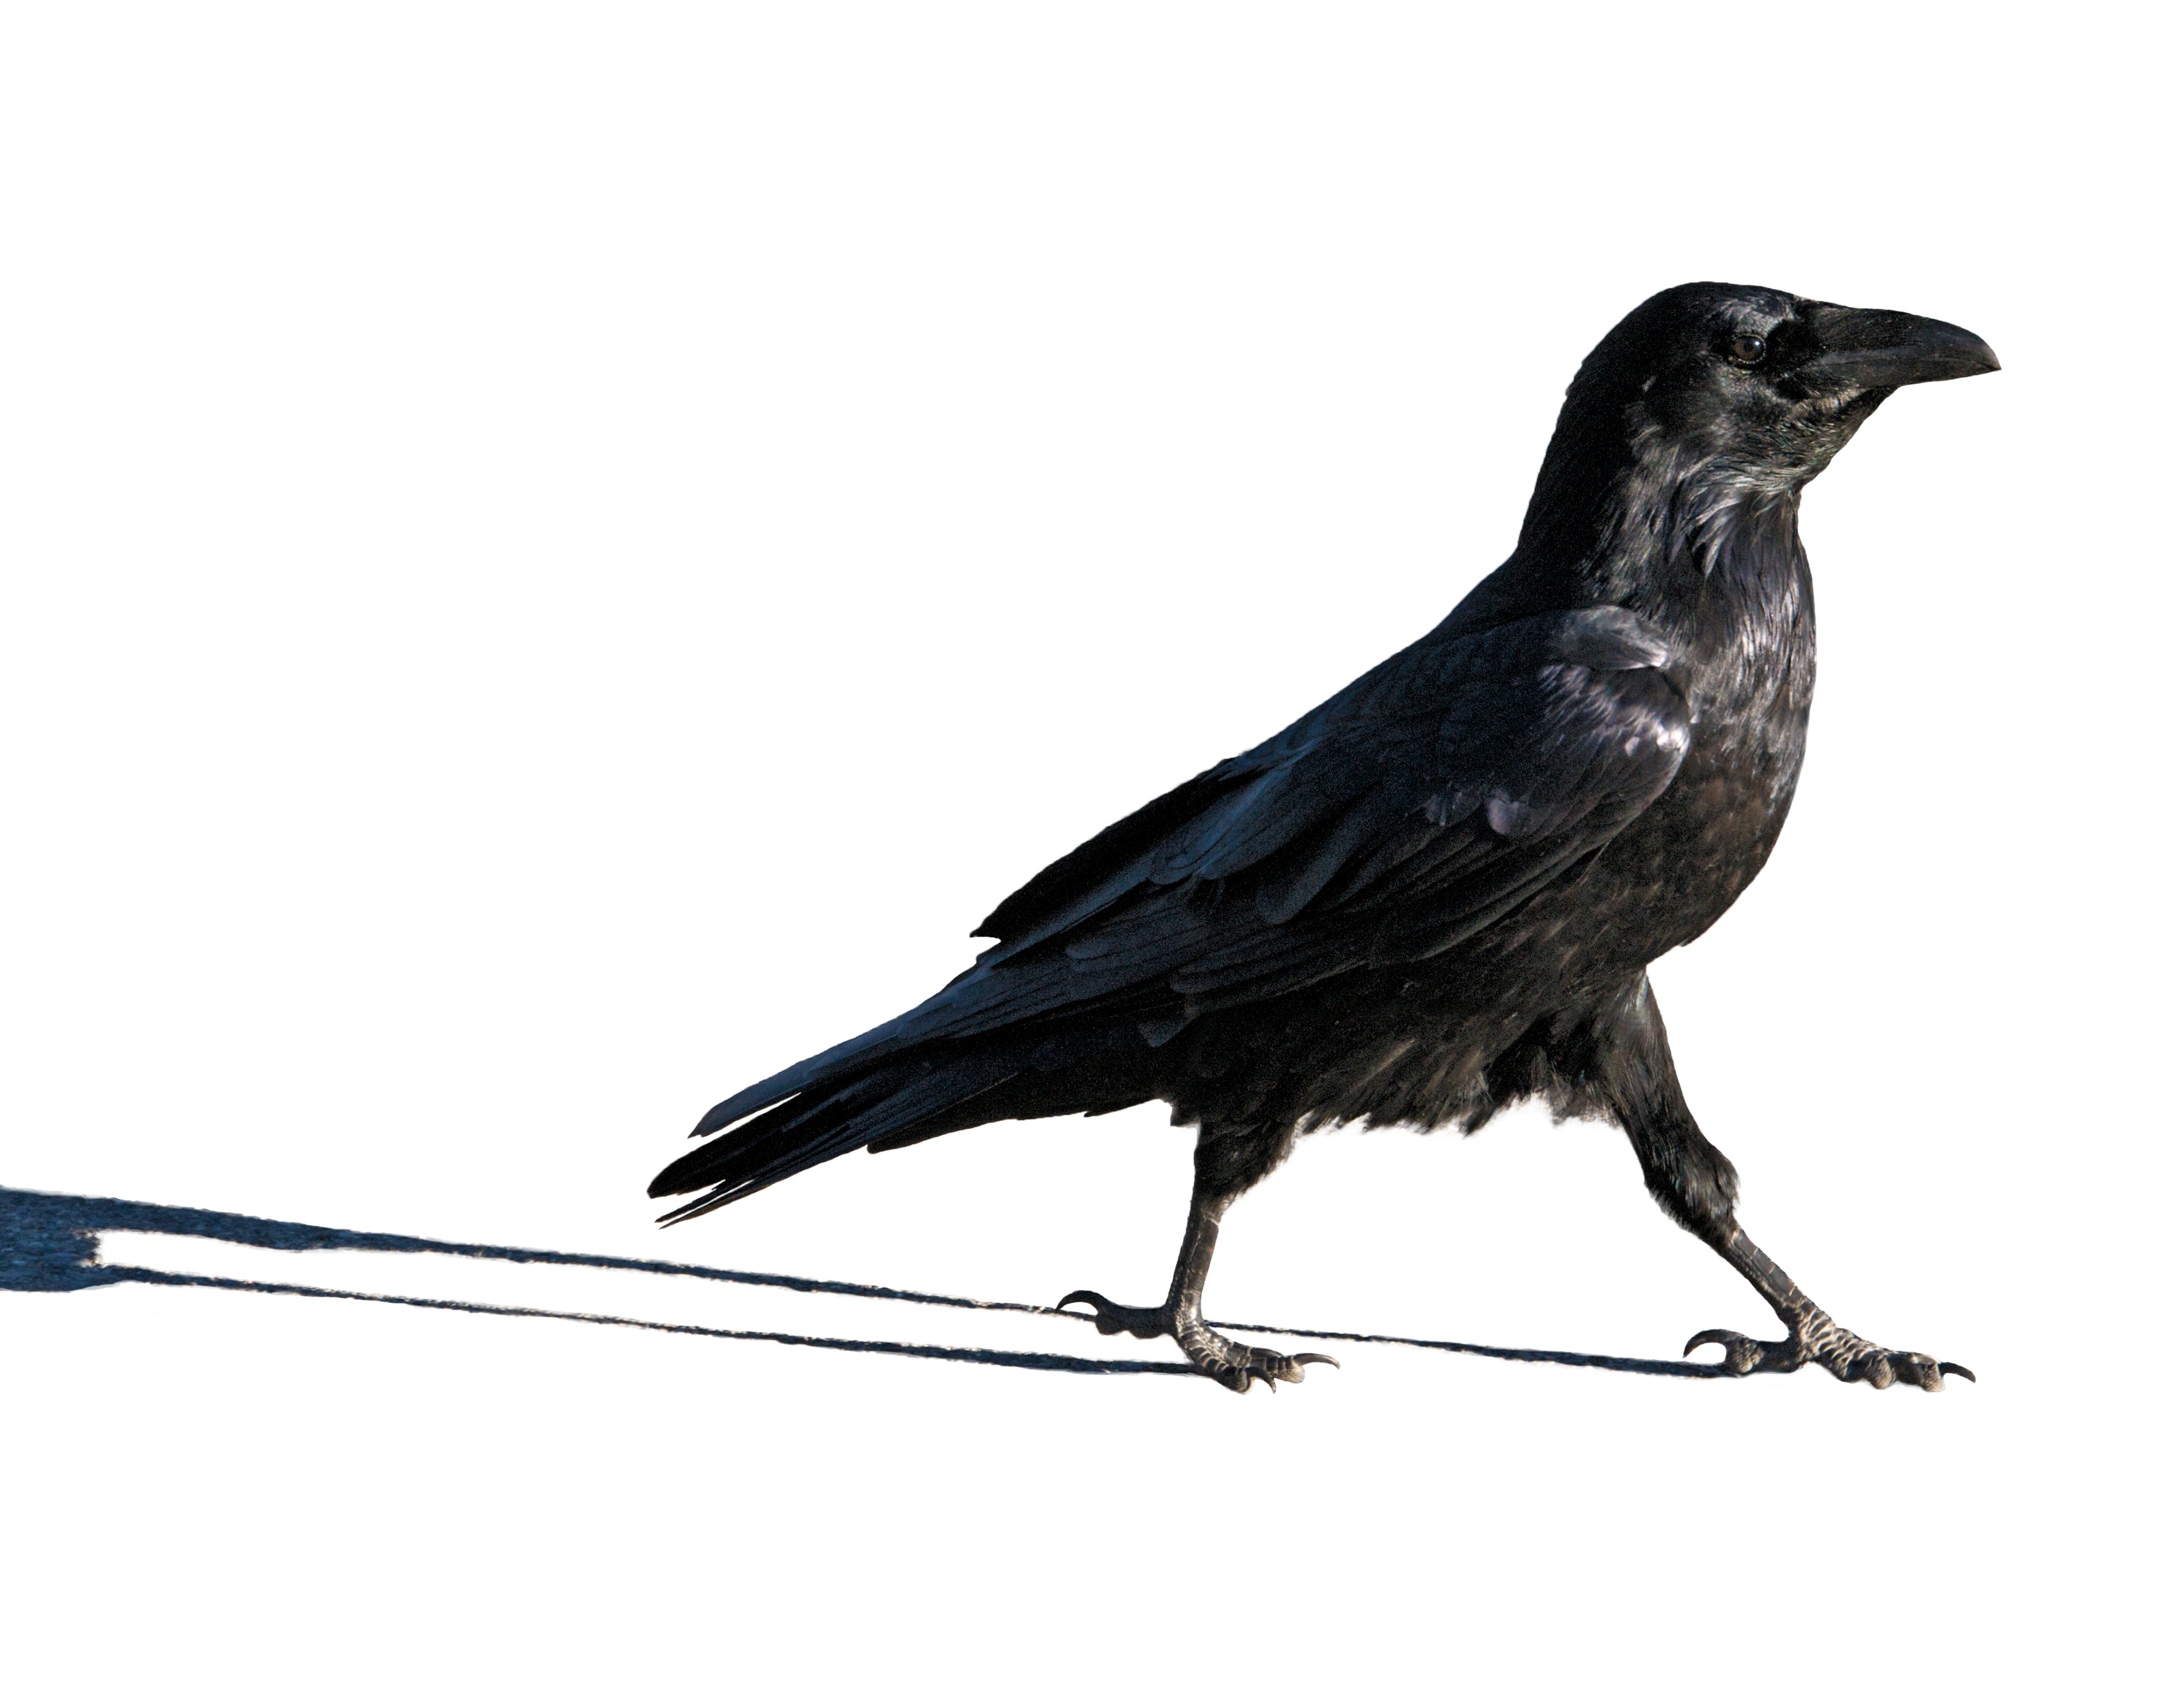 Stride on: this brainiac bird has a right to strut